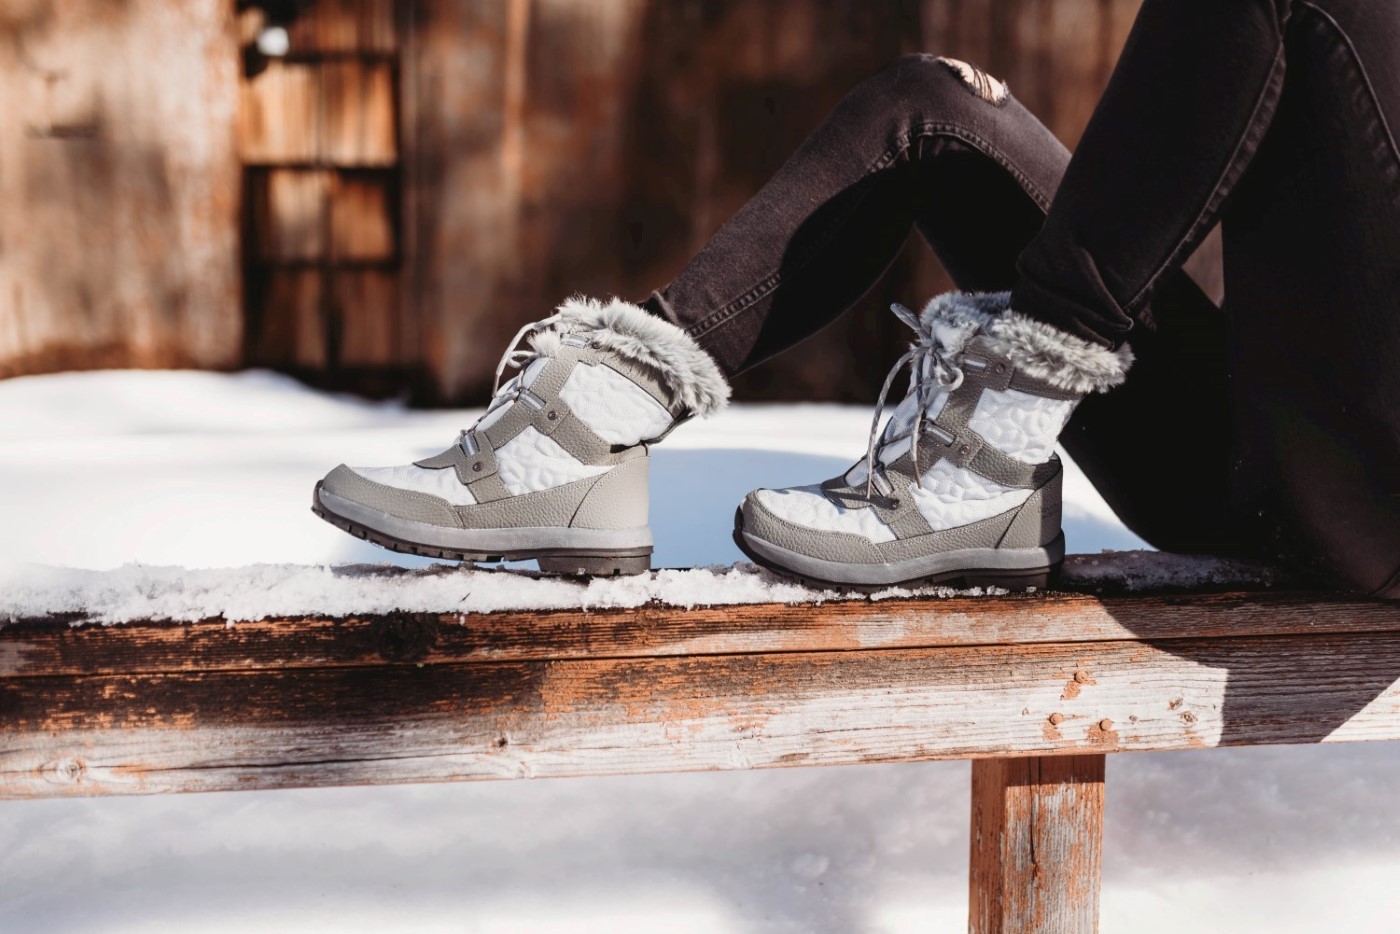 Waterproof Snow Boot - 2150W 